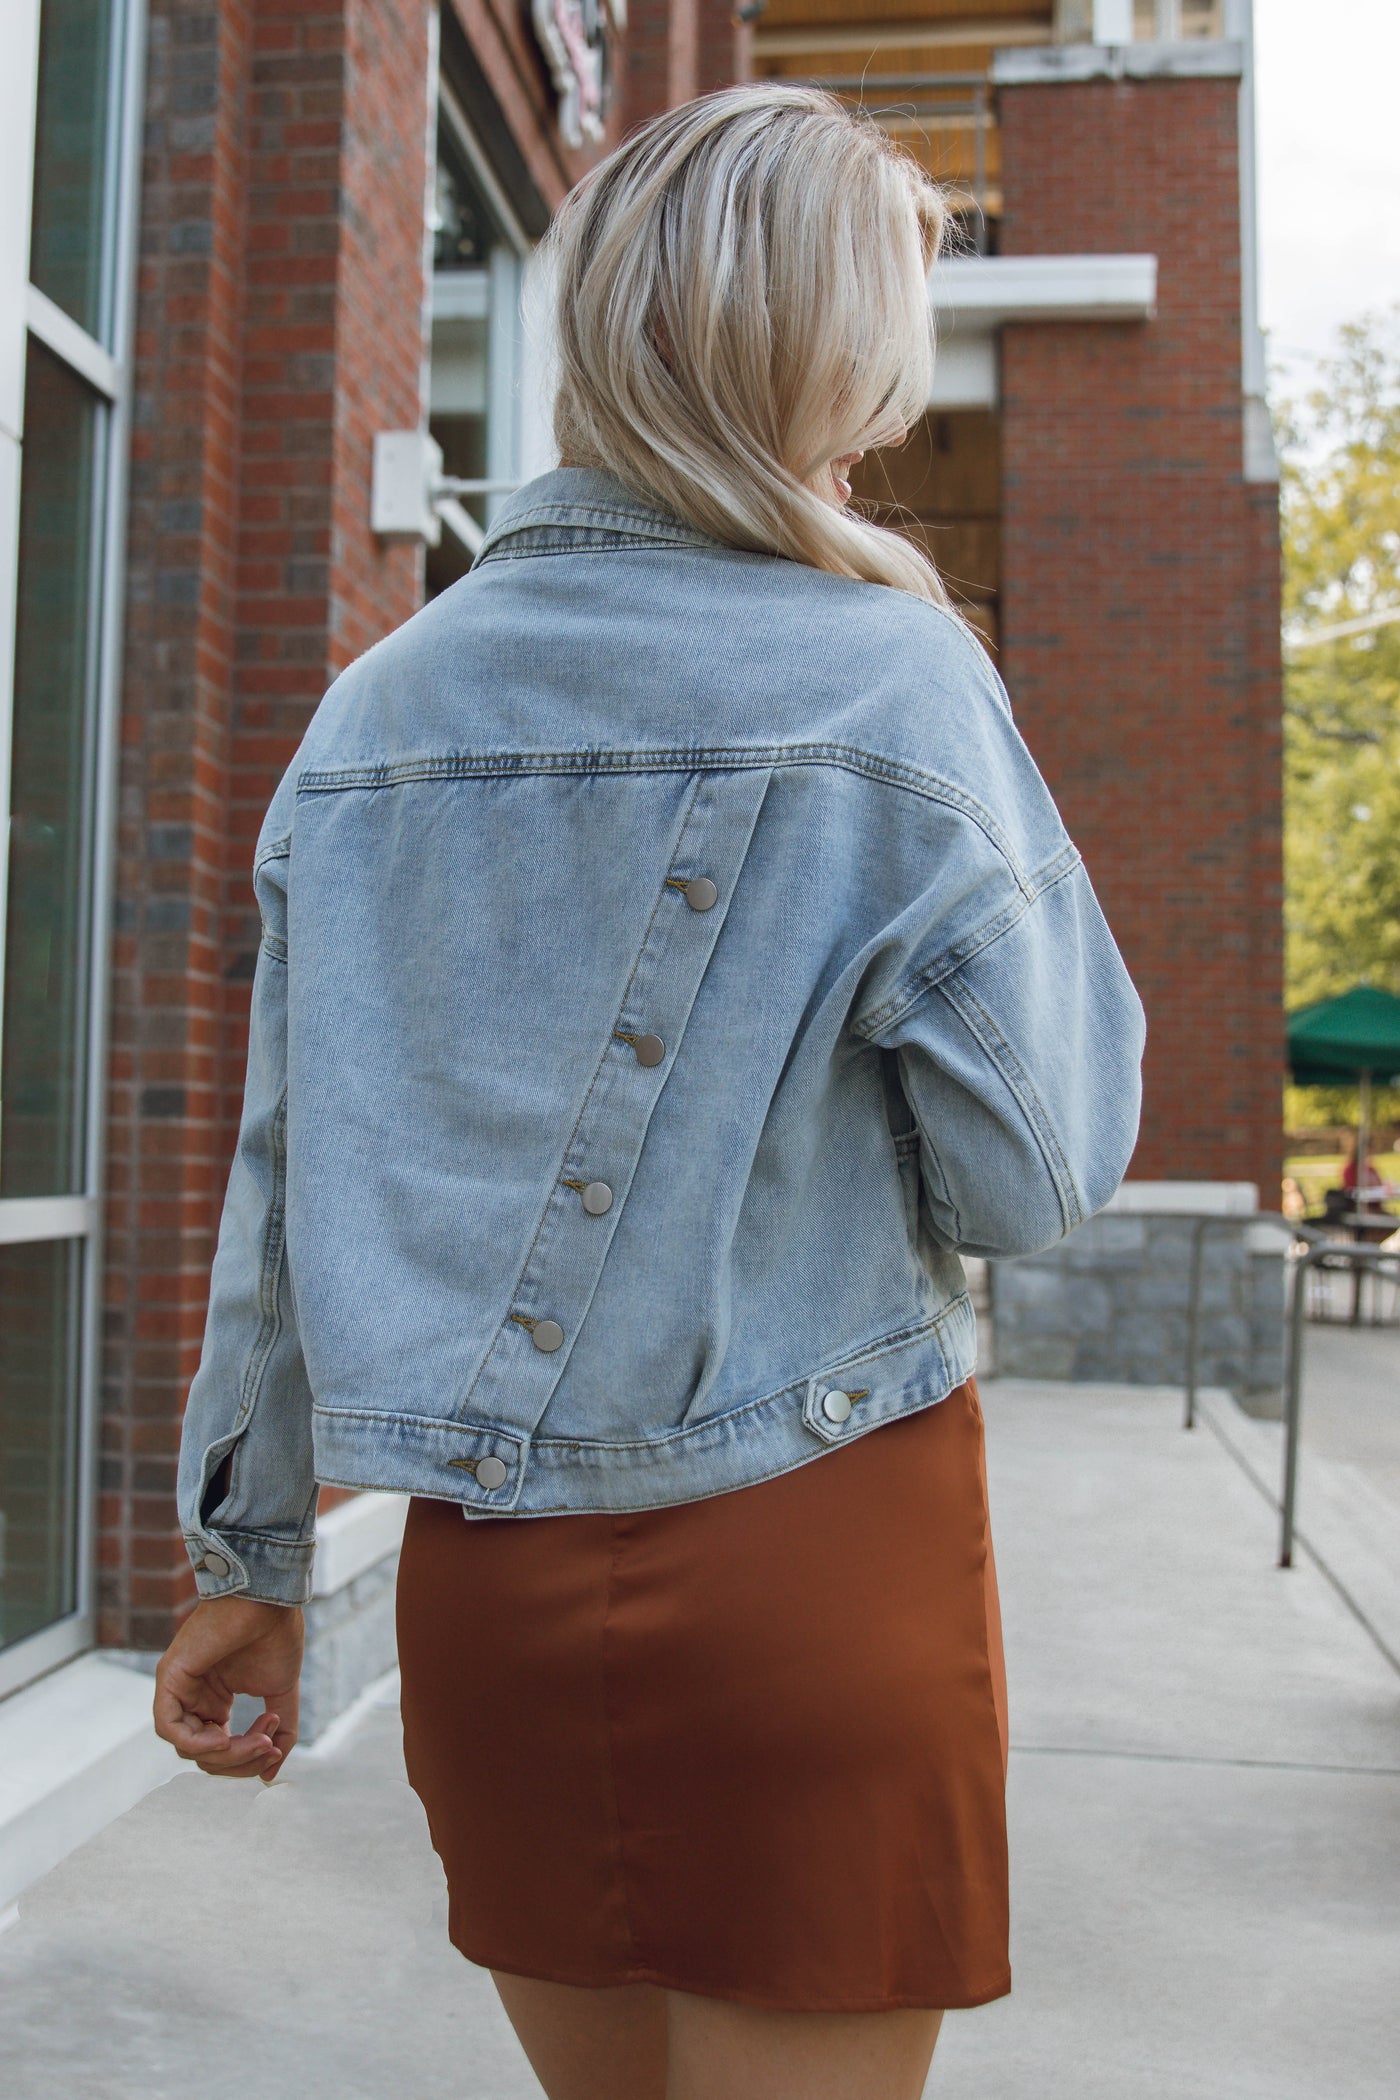 Women's Denim Jacket - Cute Denim Jacket With Buttons On Back - 90s Denim Jacket